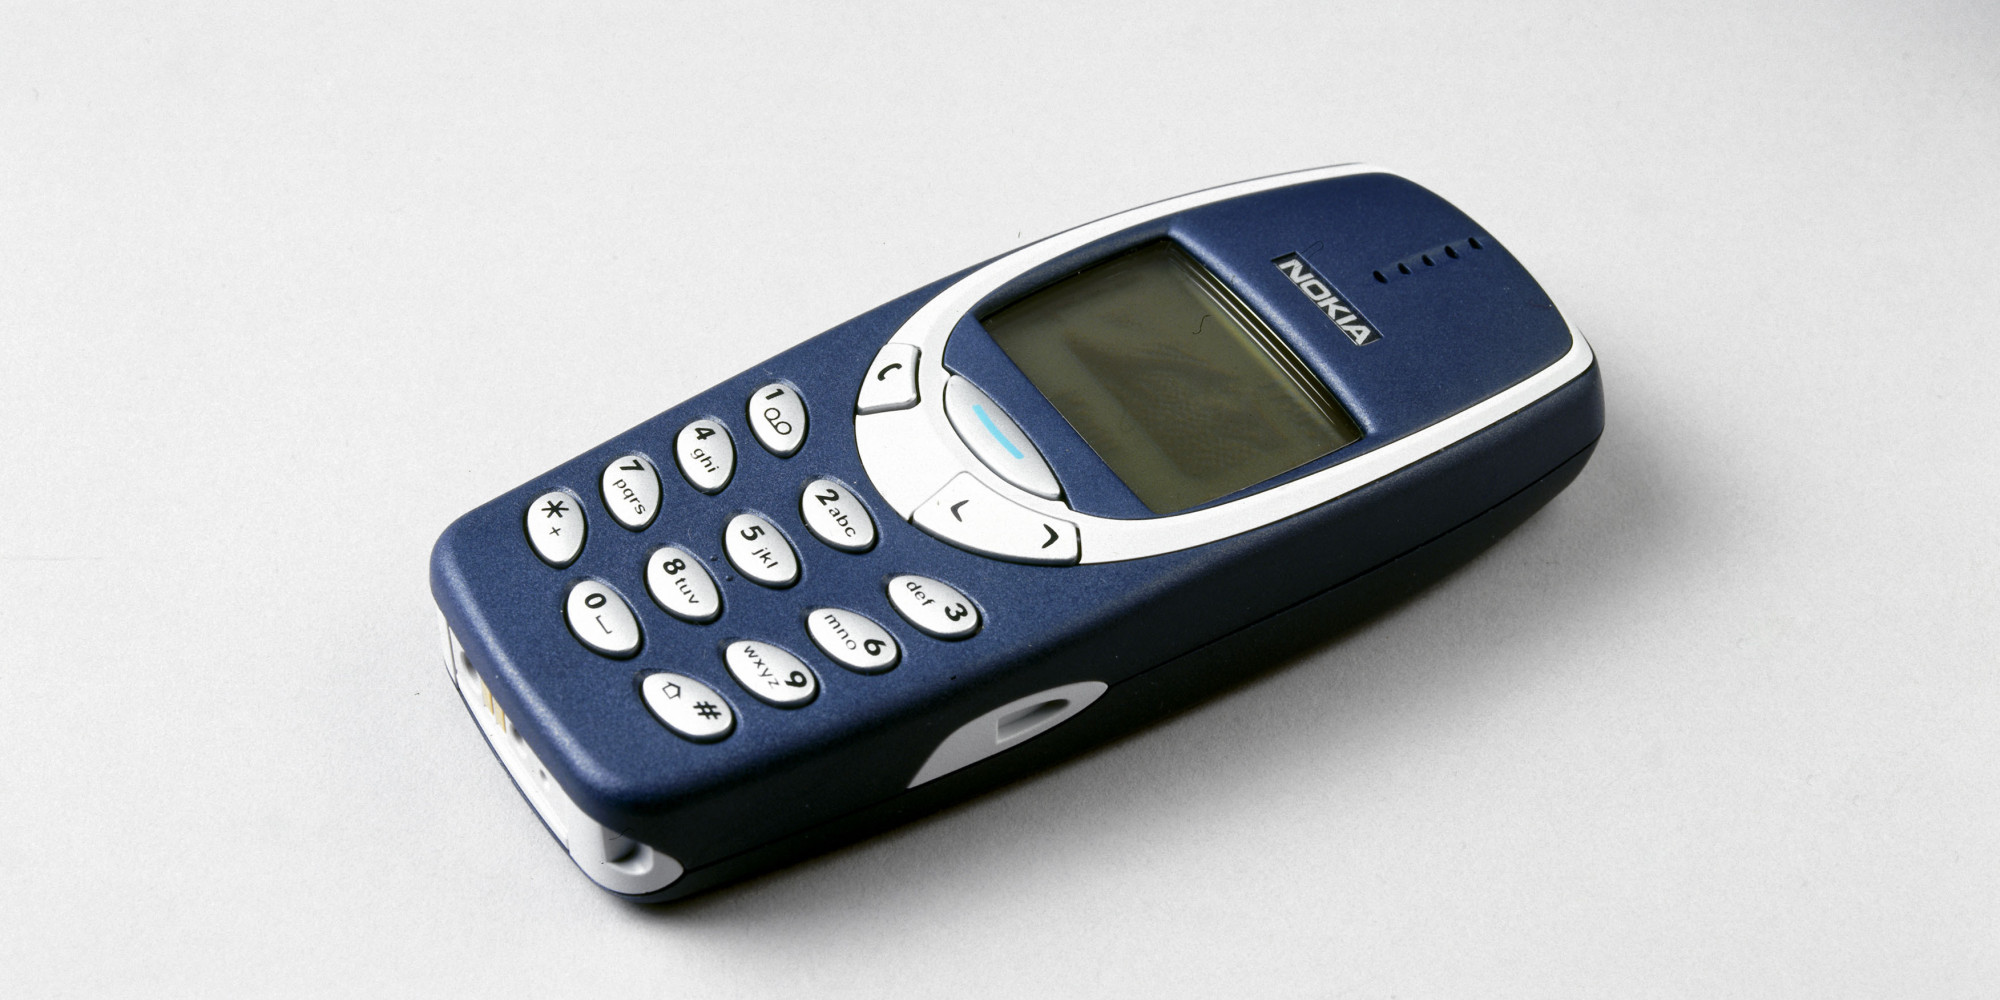 Nokia 3310 thinner body